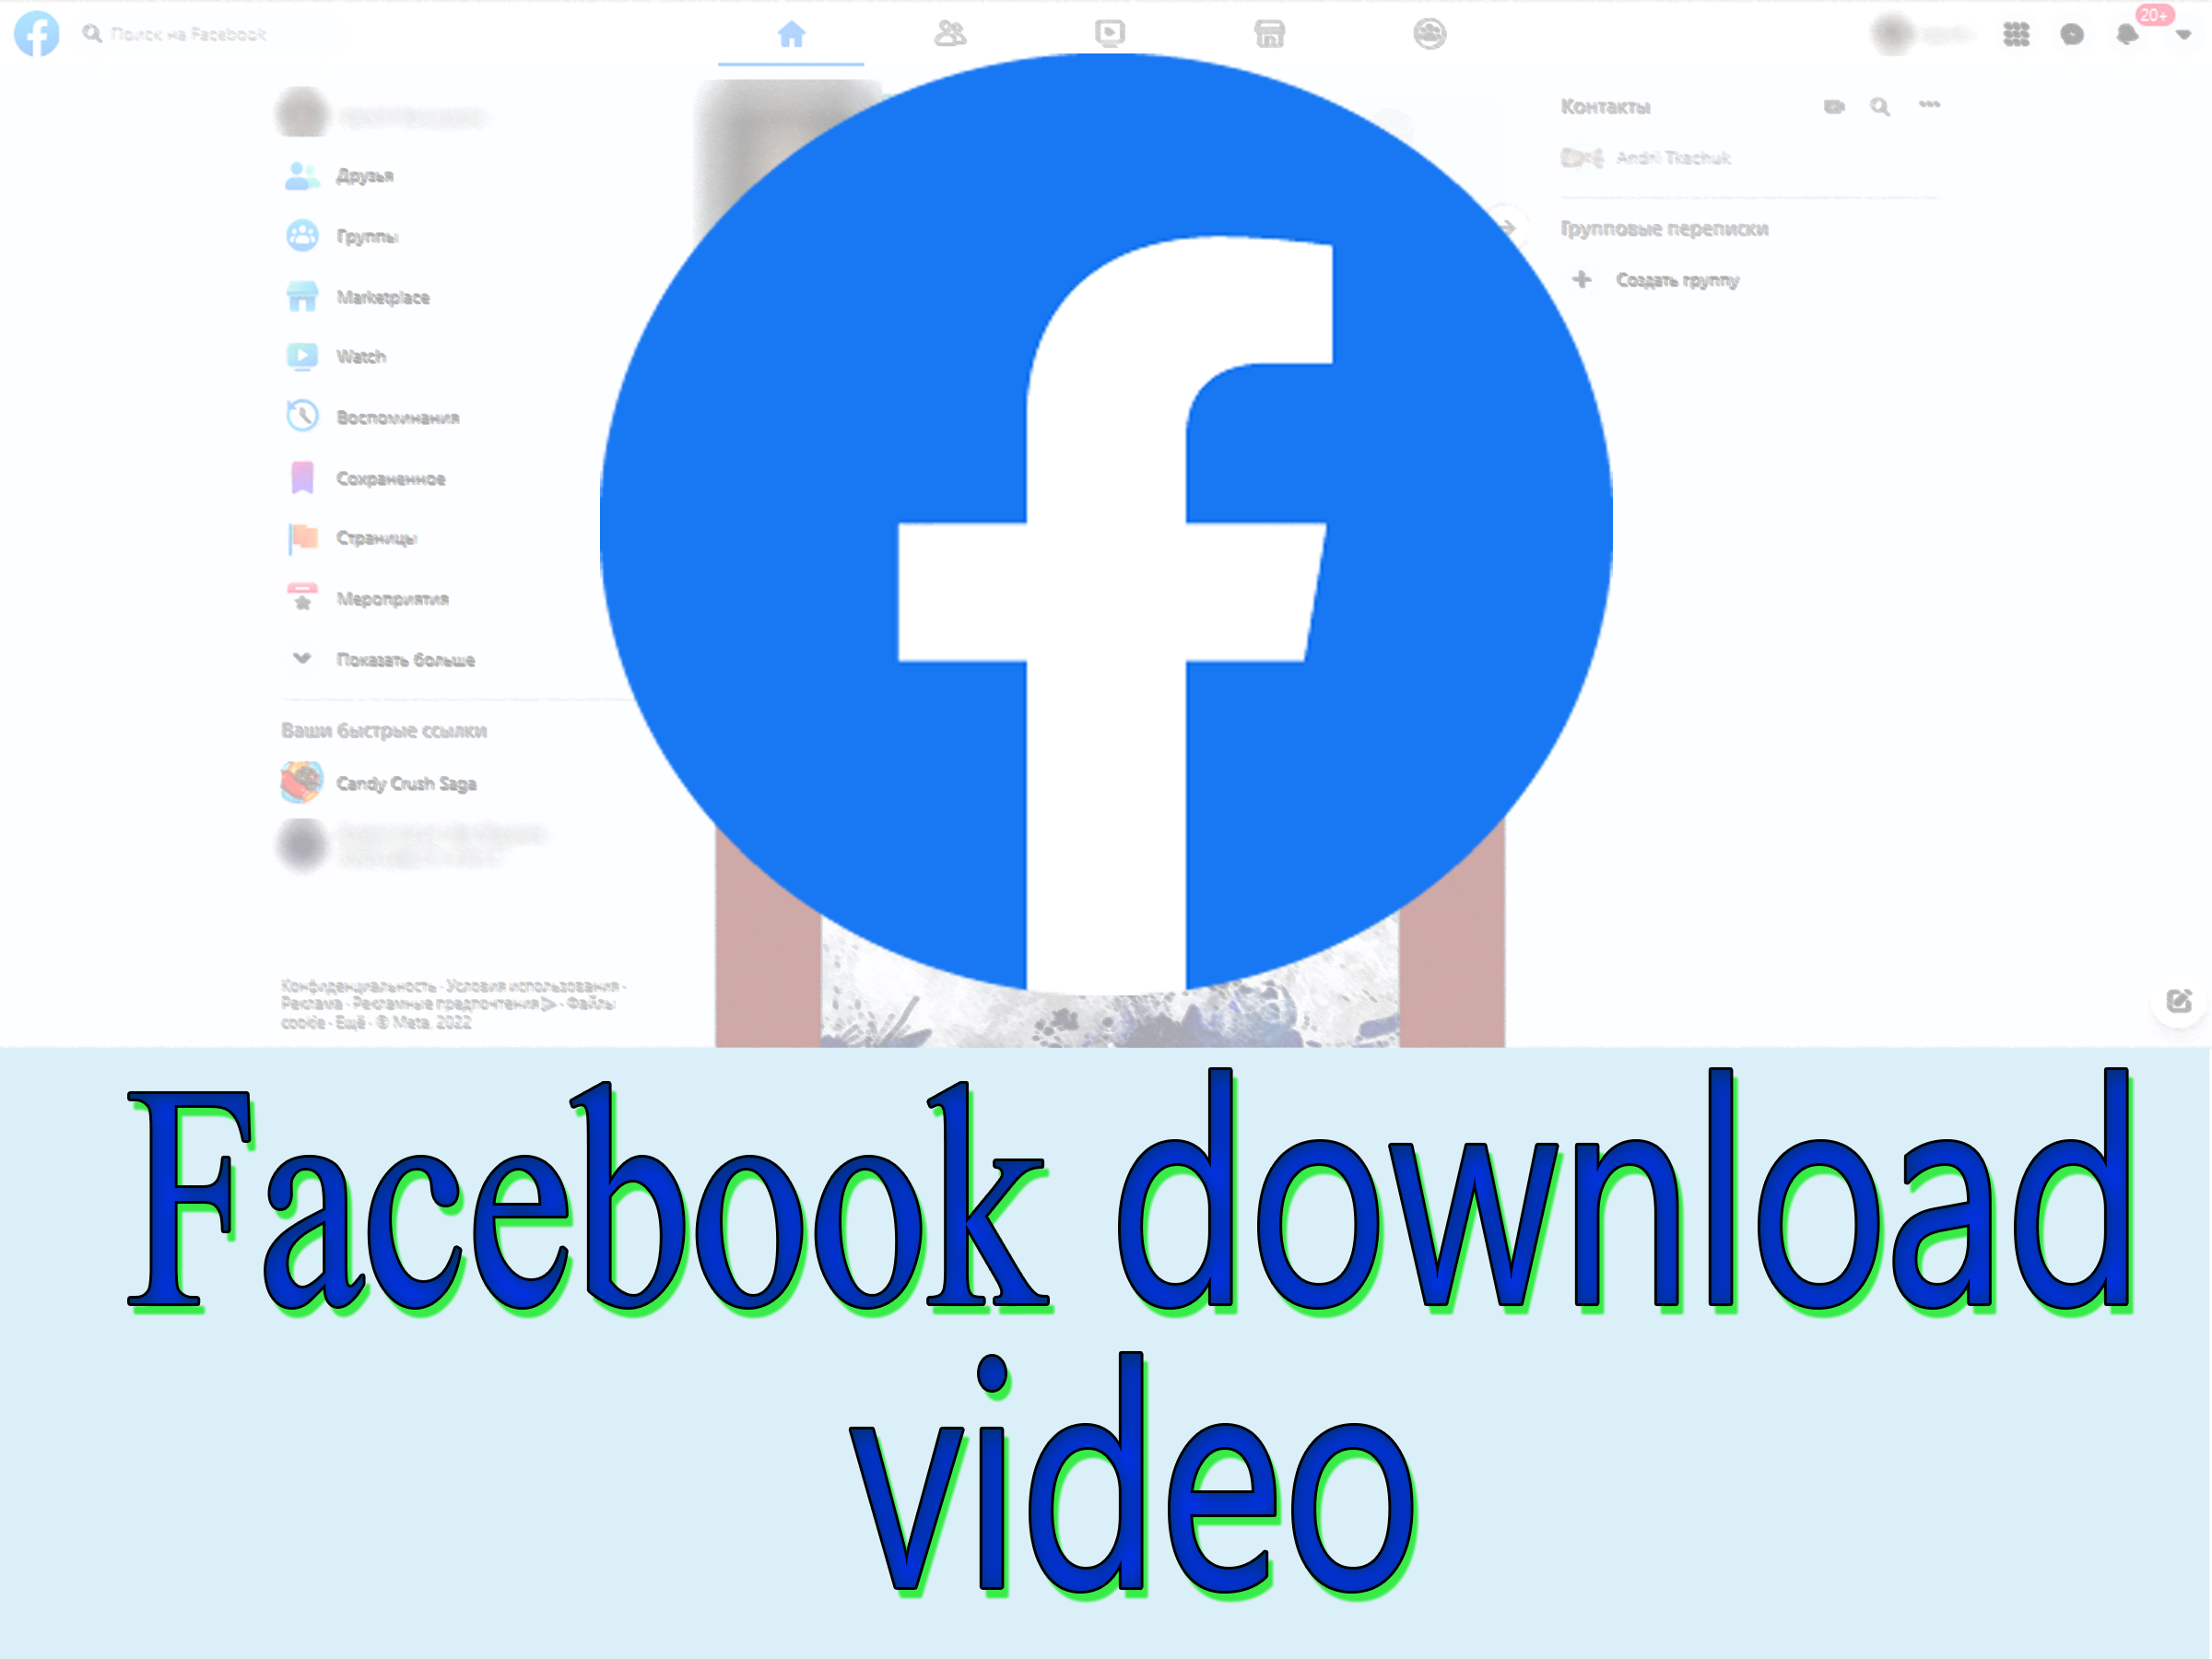 Facebook download video promo image